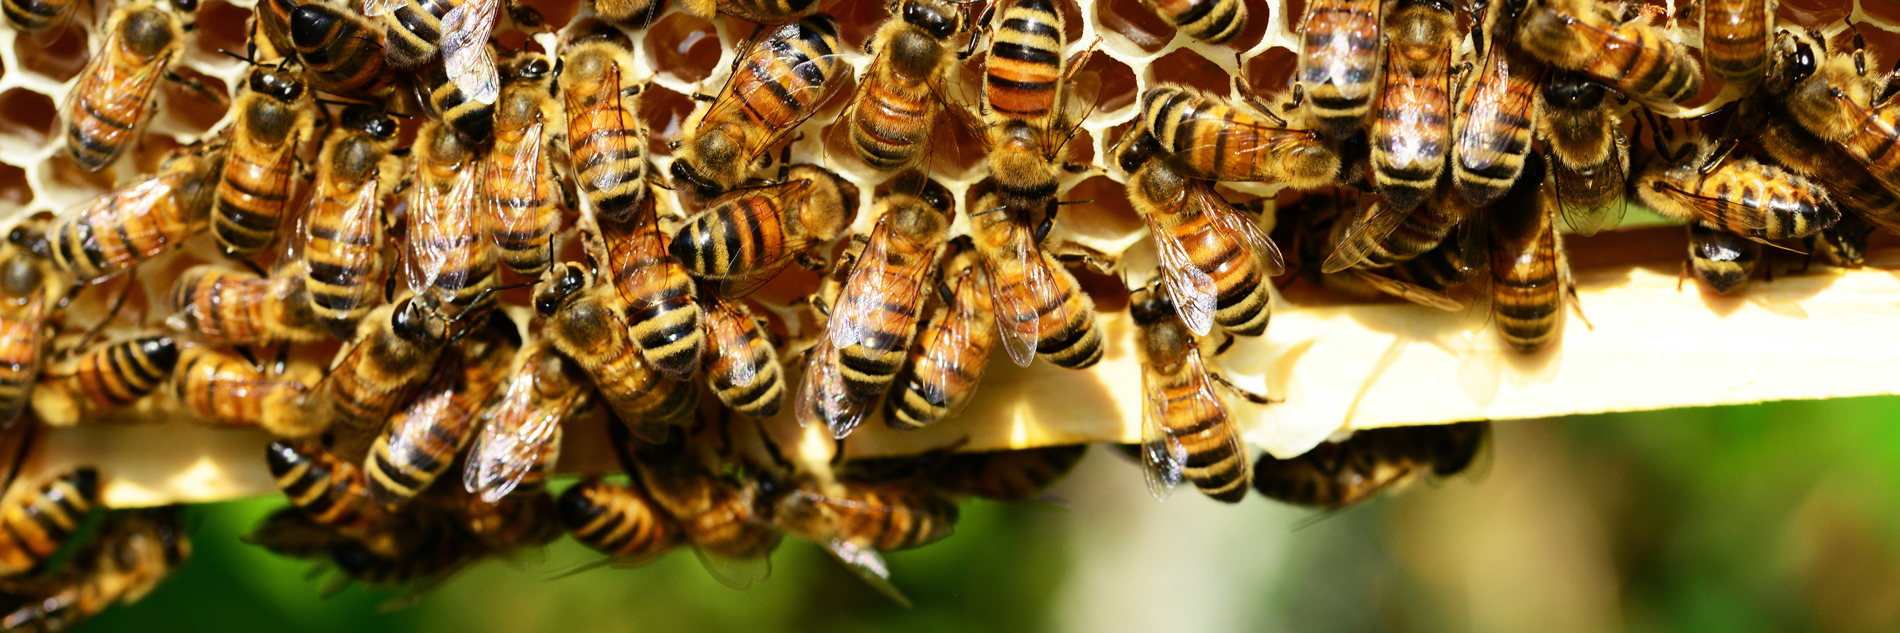 Bees making honey at the hive